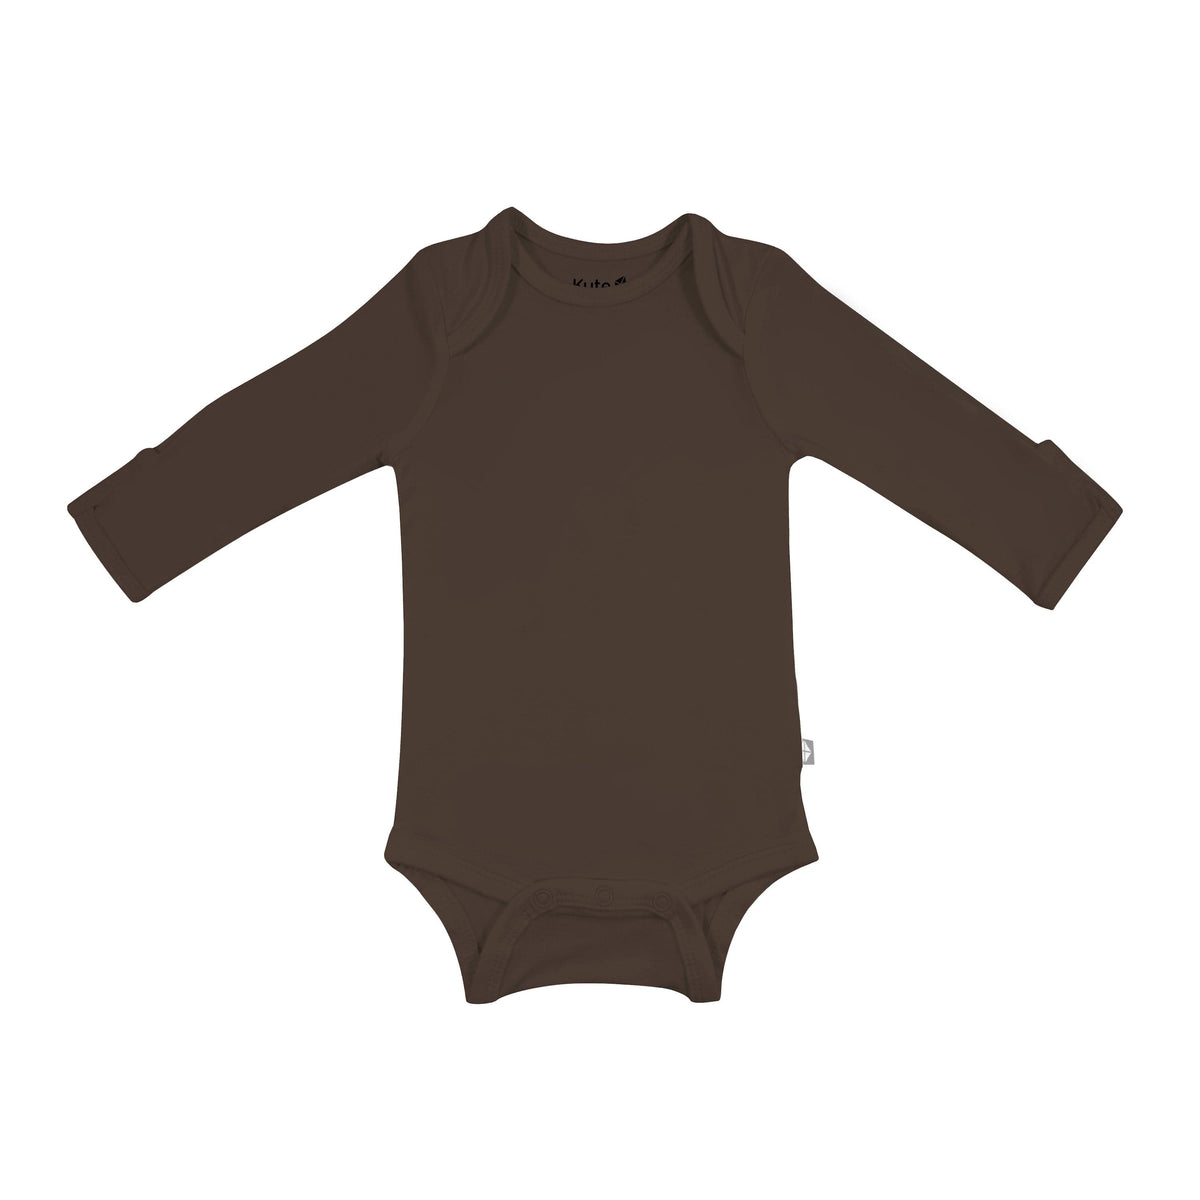 Kyte Baby Long Sleeve Bodysuits Long Sleeve Bodysuit in Espresso